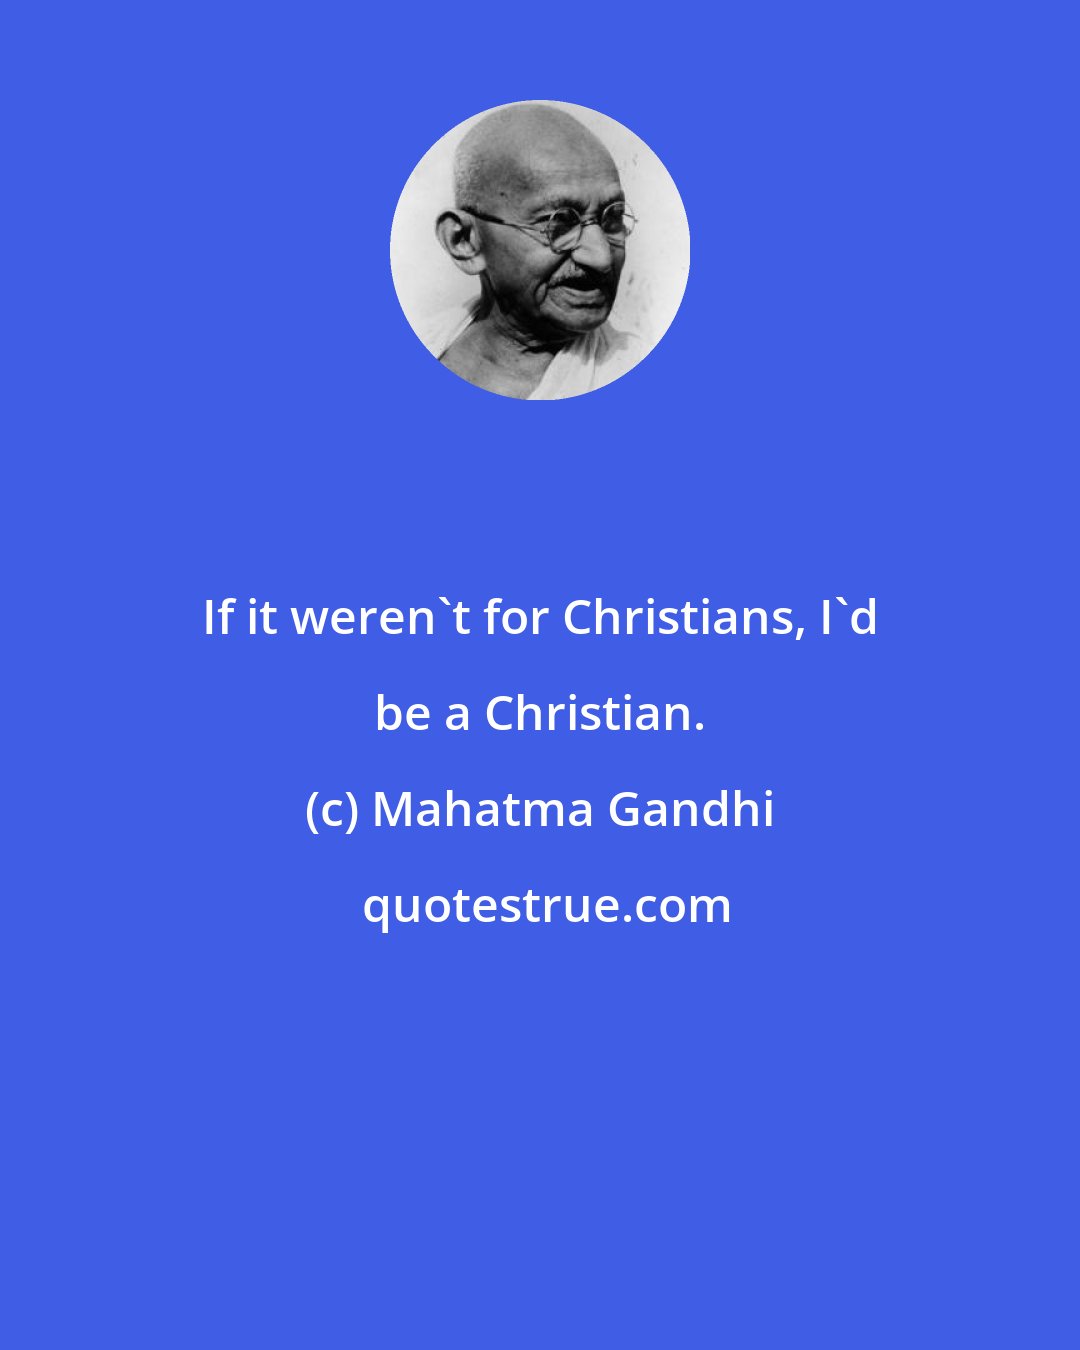 Mahatma Gandhi: If it weren't for Christians, I'd be a Christian.